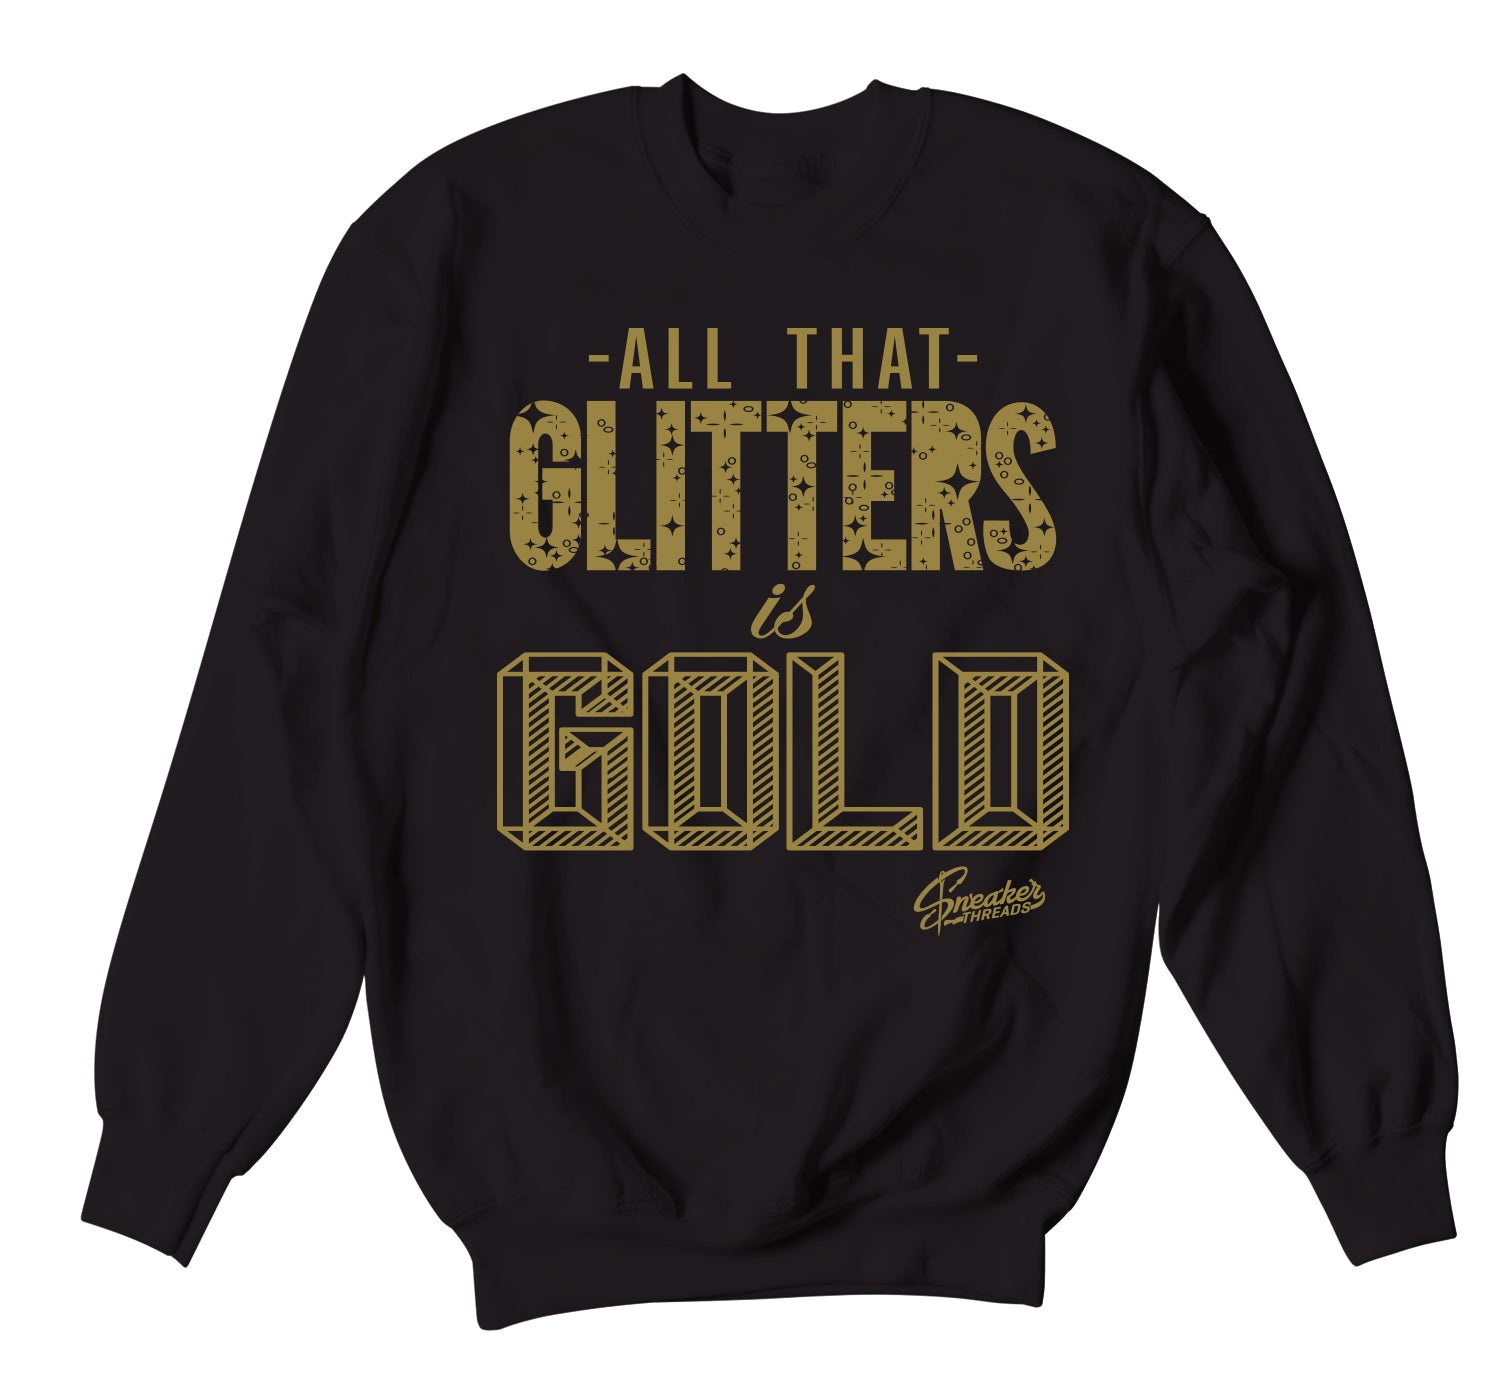 Retro 12 Royalty Sweater - Glitters - Black